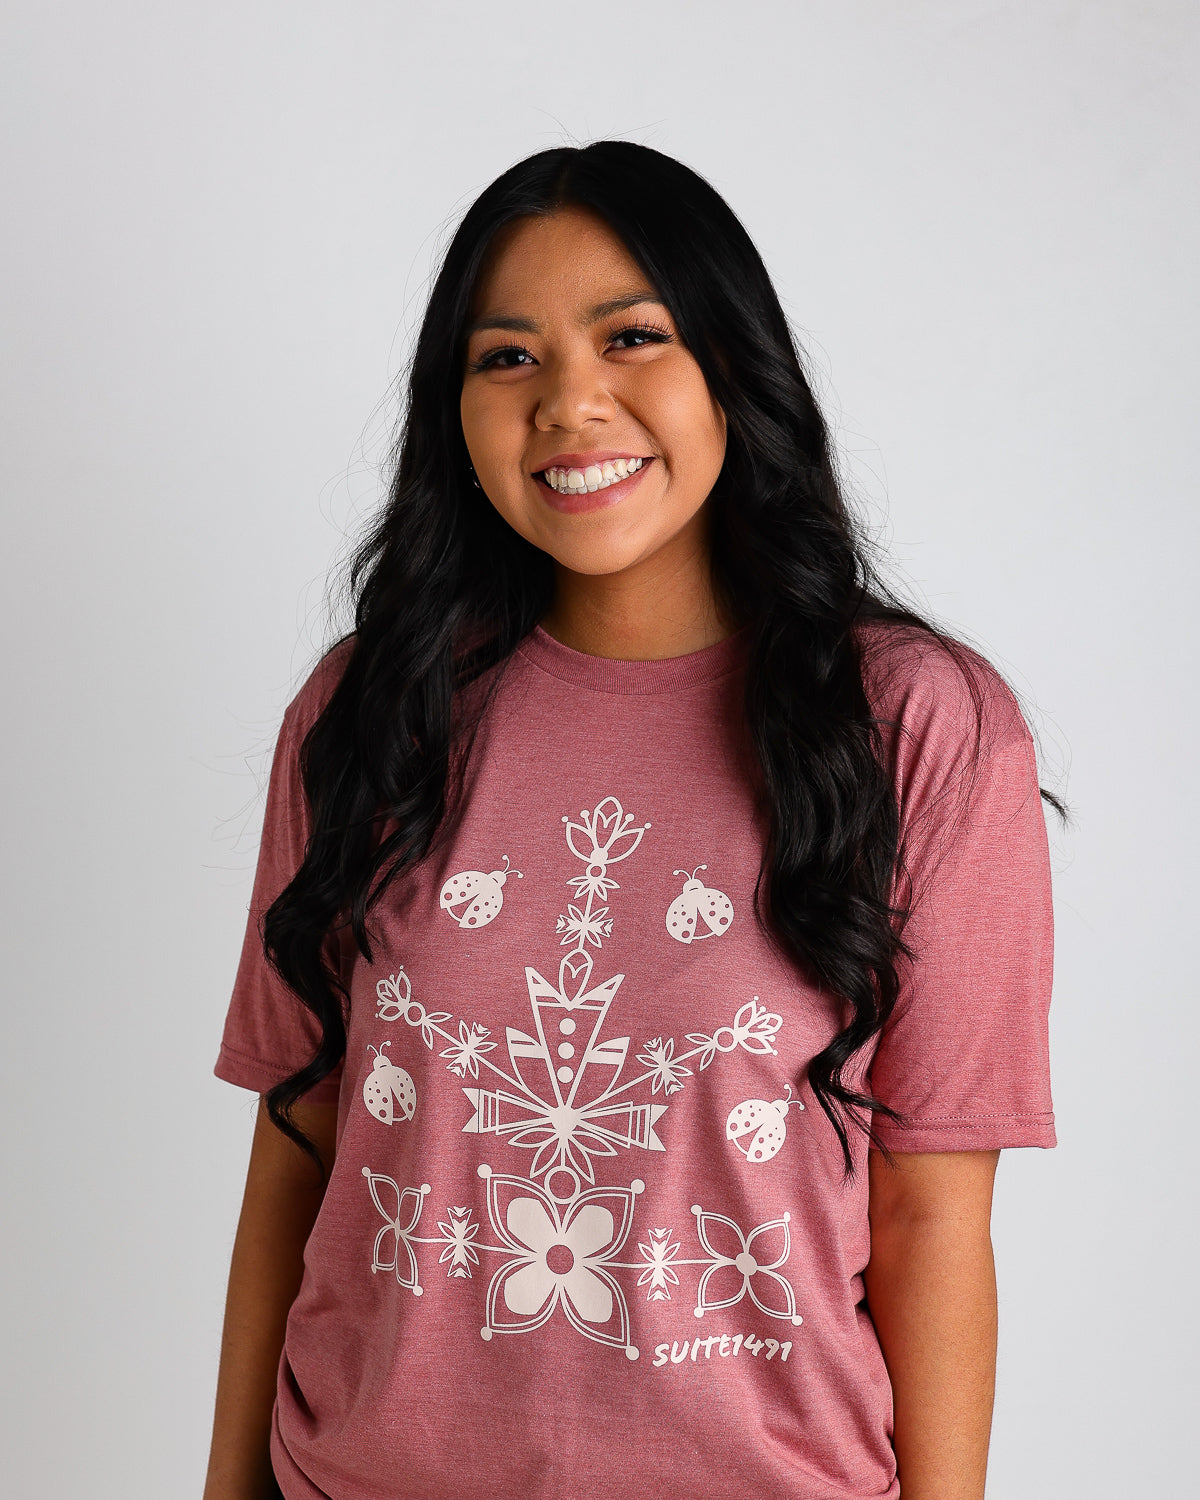 Native American Women tshirt design for sale - Buy t-shirt designs